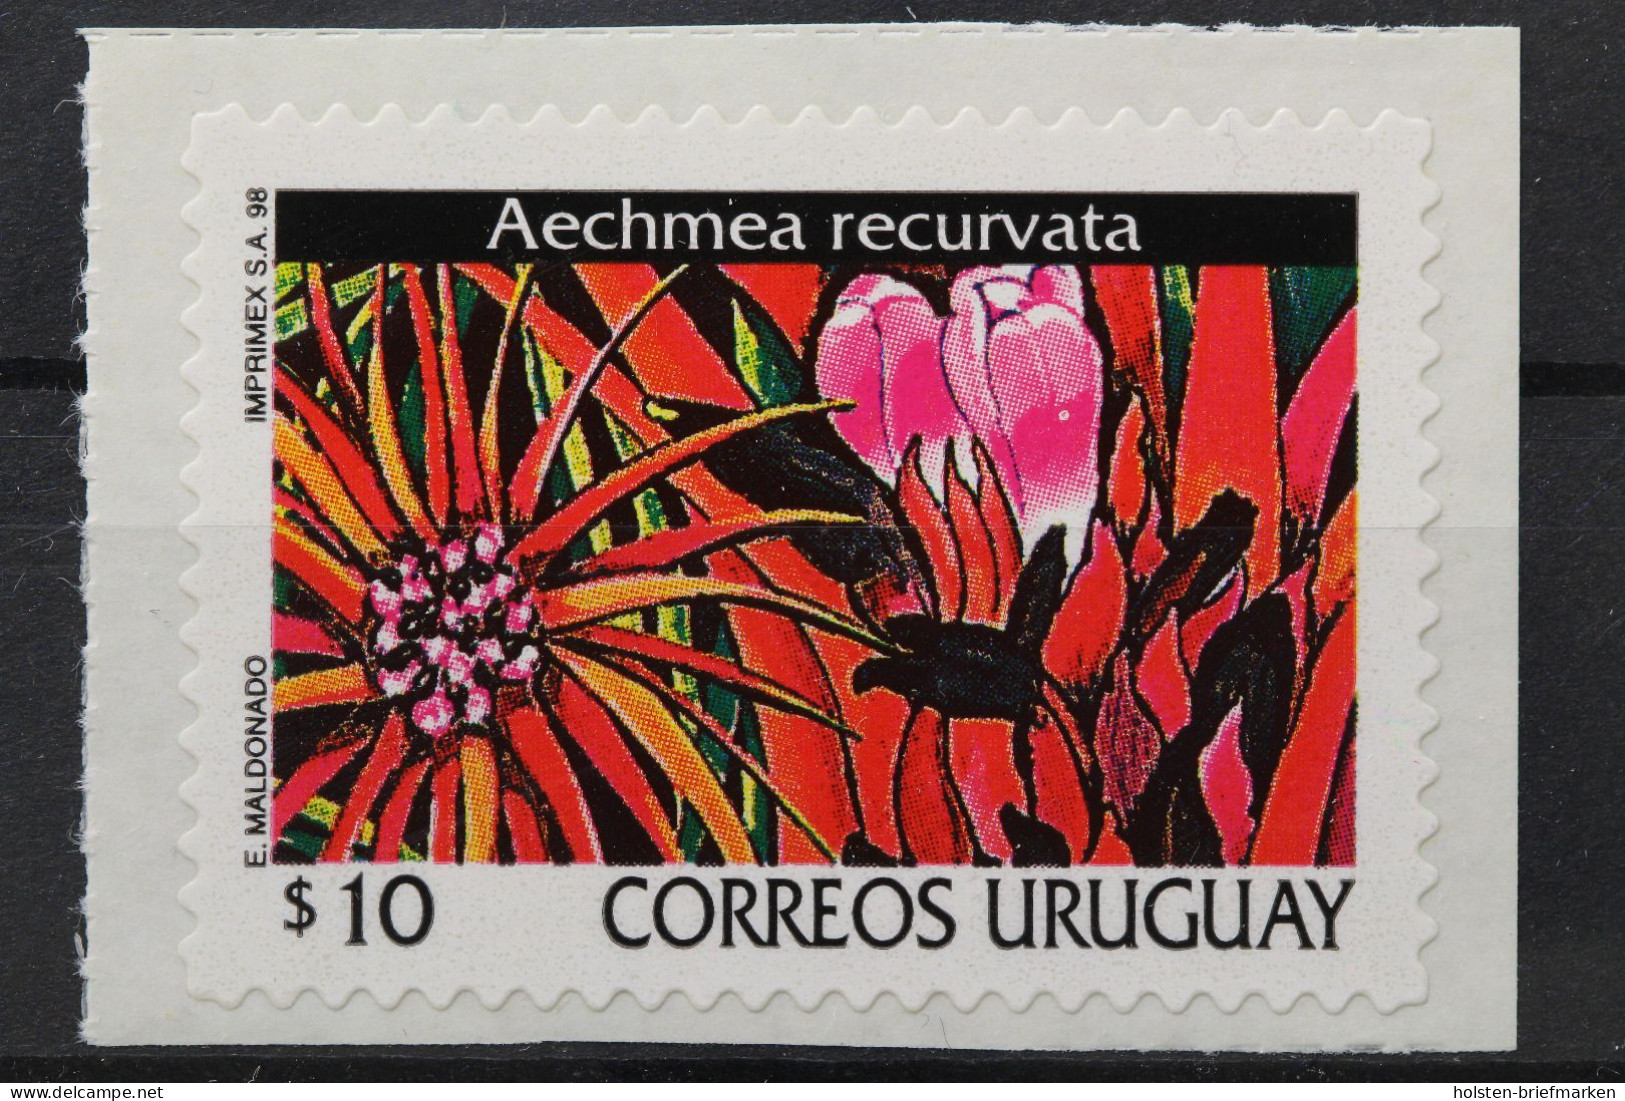 Uruguay, MiNr. 2415 Type I, Skl., Postfrisch - Uruguay